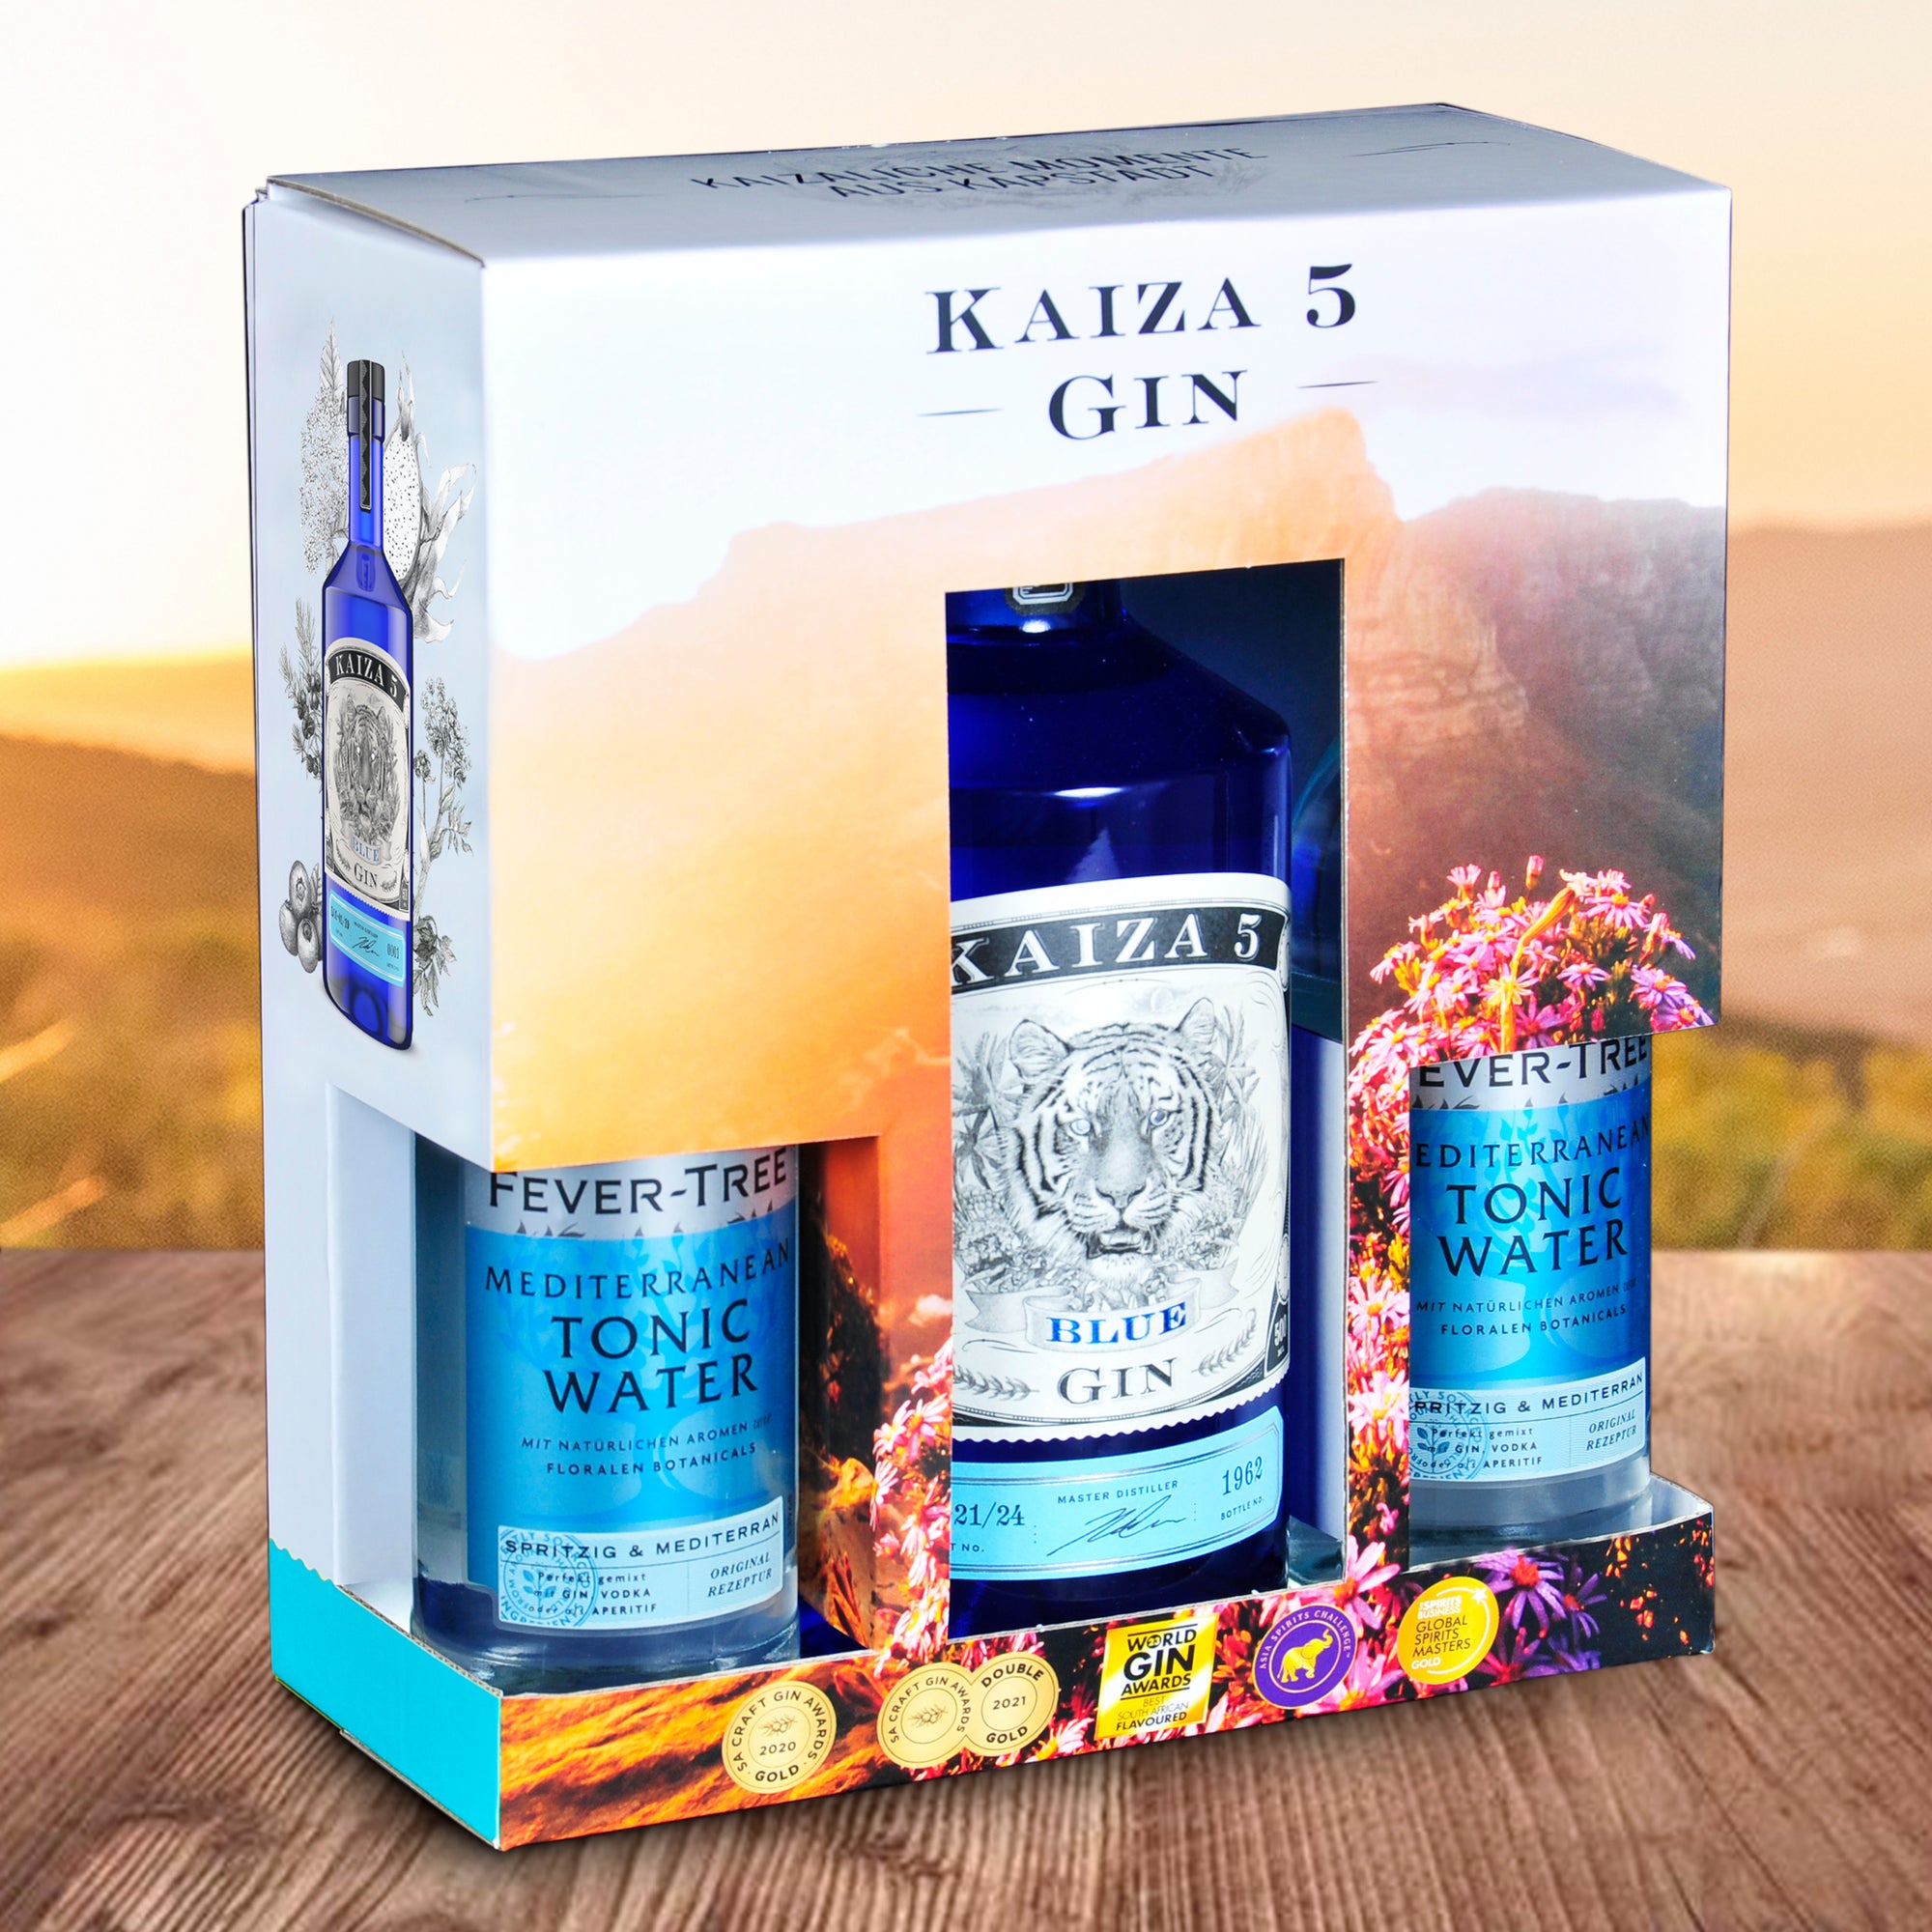 KAIZA 5 BLUE GIN Box mit 2x Fever-Tree Mediterranean